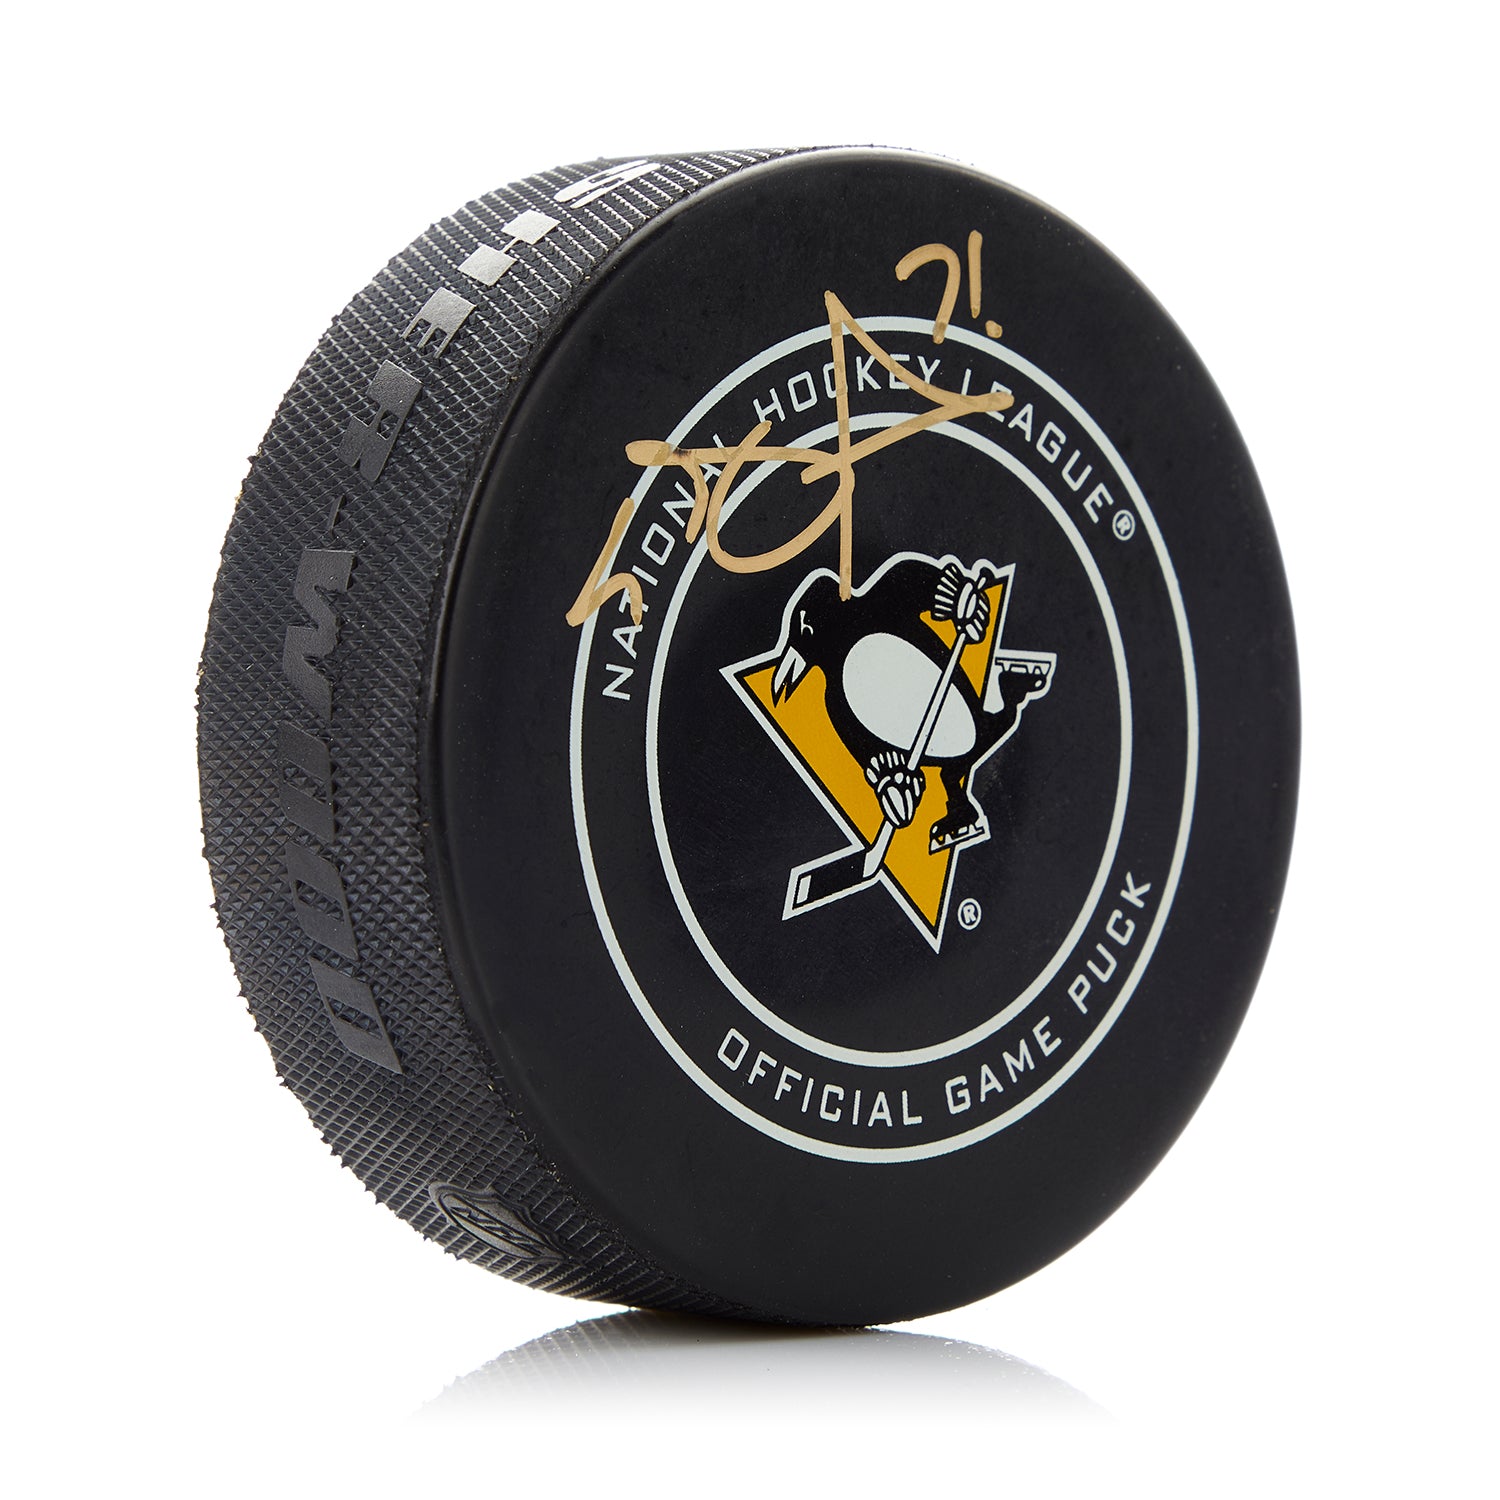 Evgeni Malkin Pittsburgh Penguins Signed Official Game Model Hockey Puck